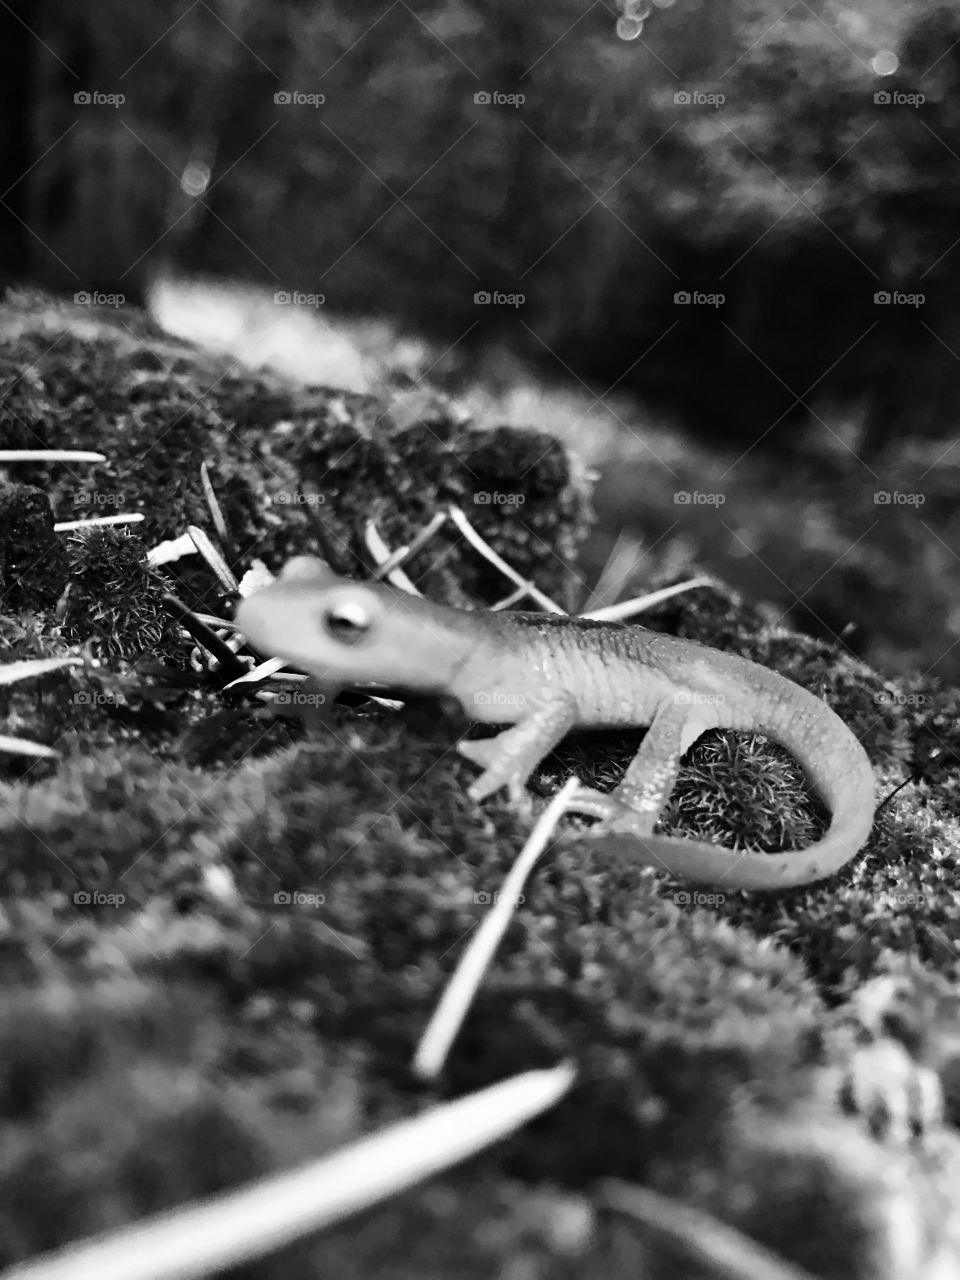 Black and white newt